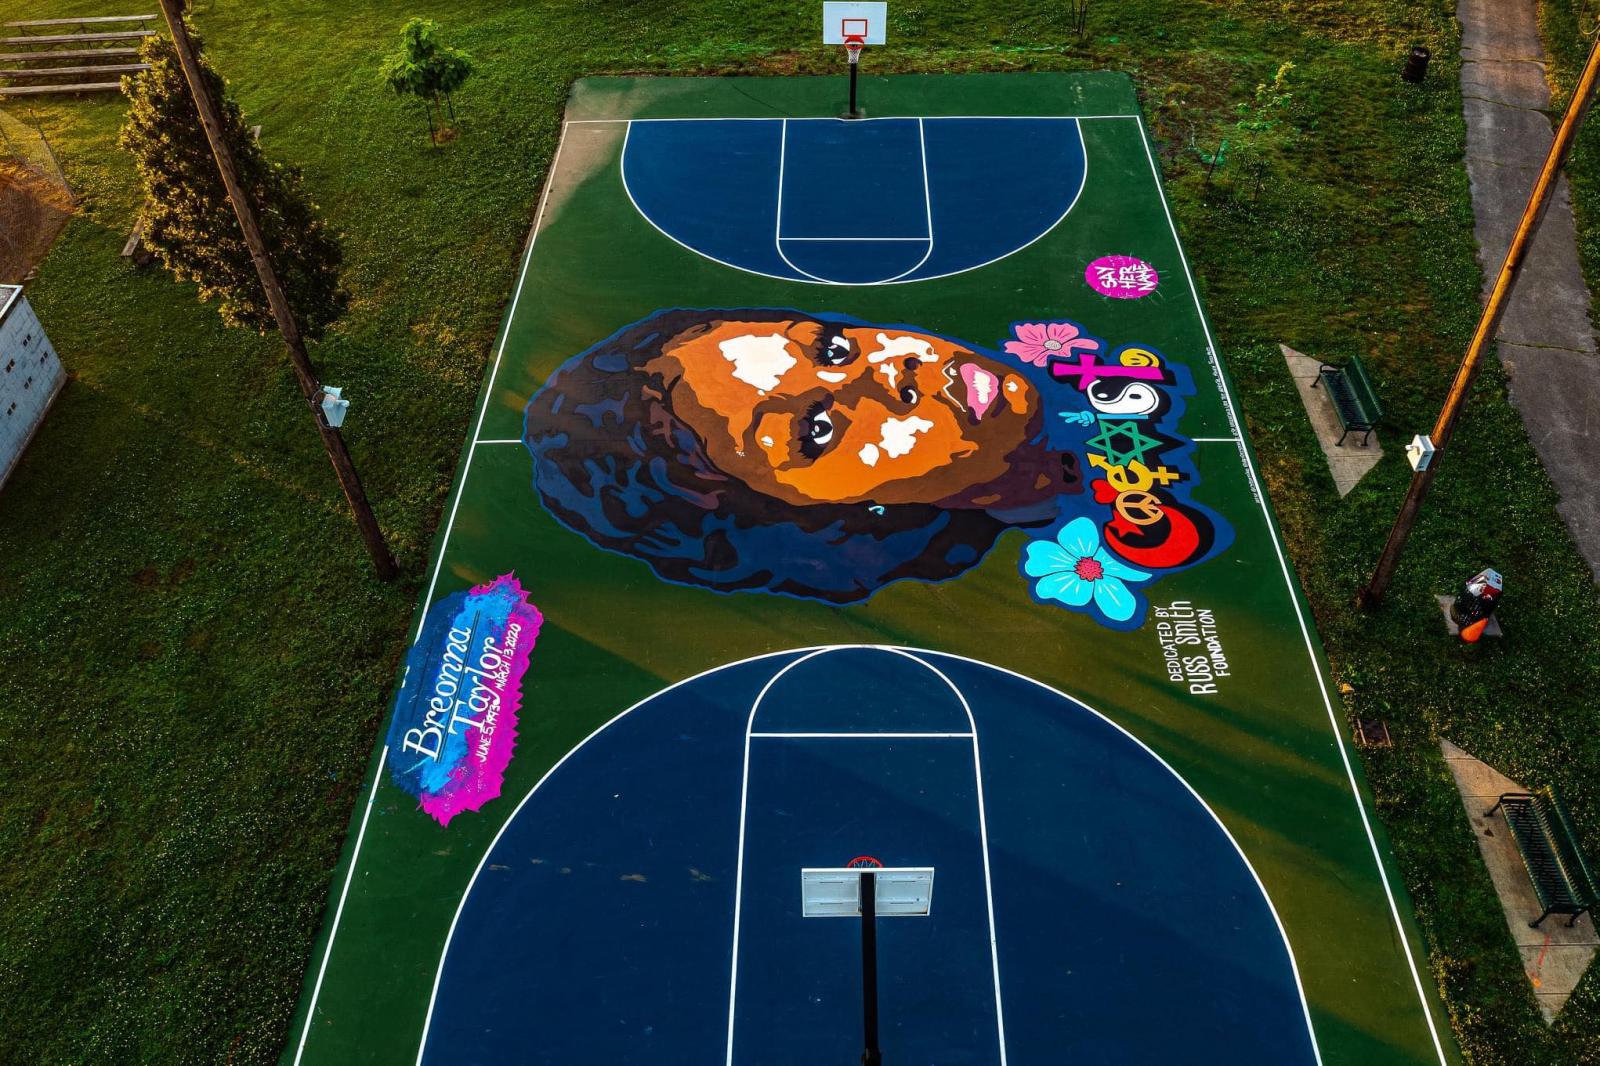 Basketball court mural painted in Lousiville, KY at Lannan Memorial Park